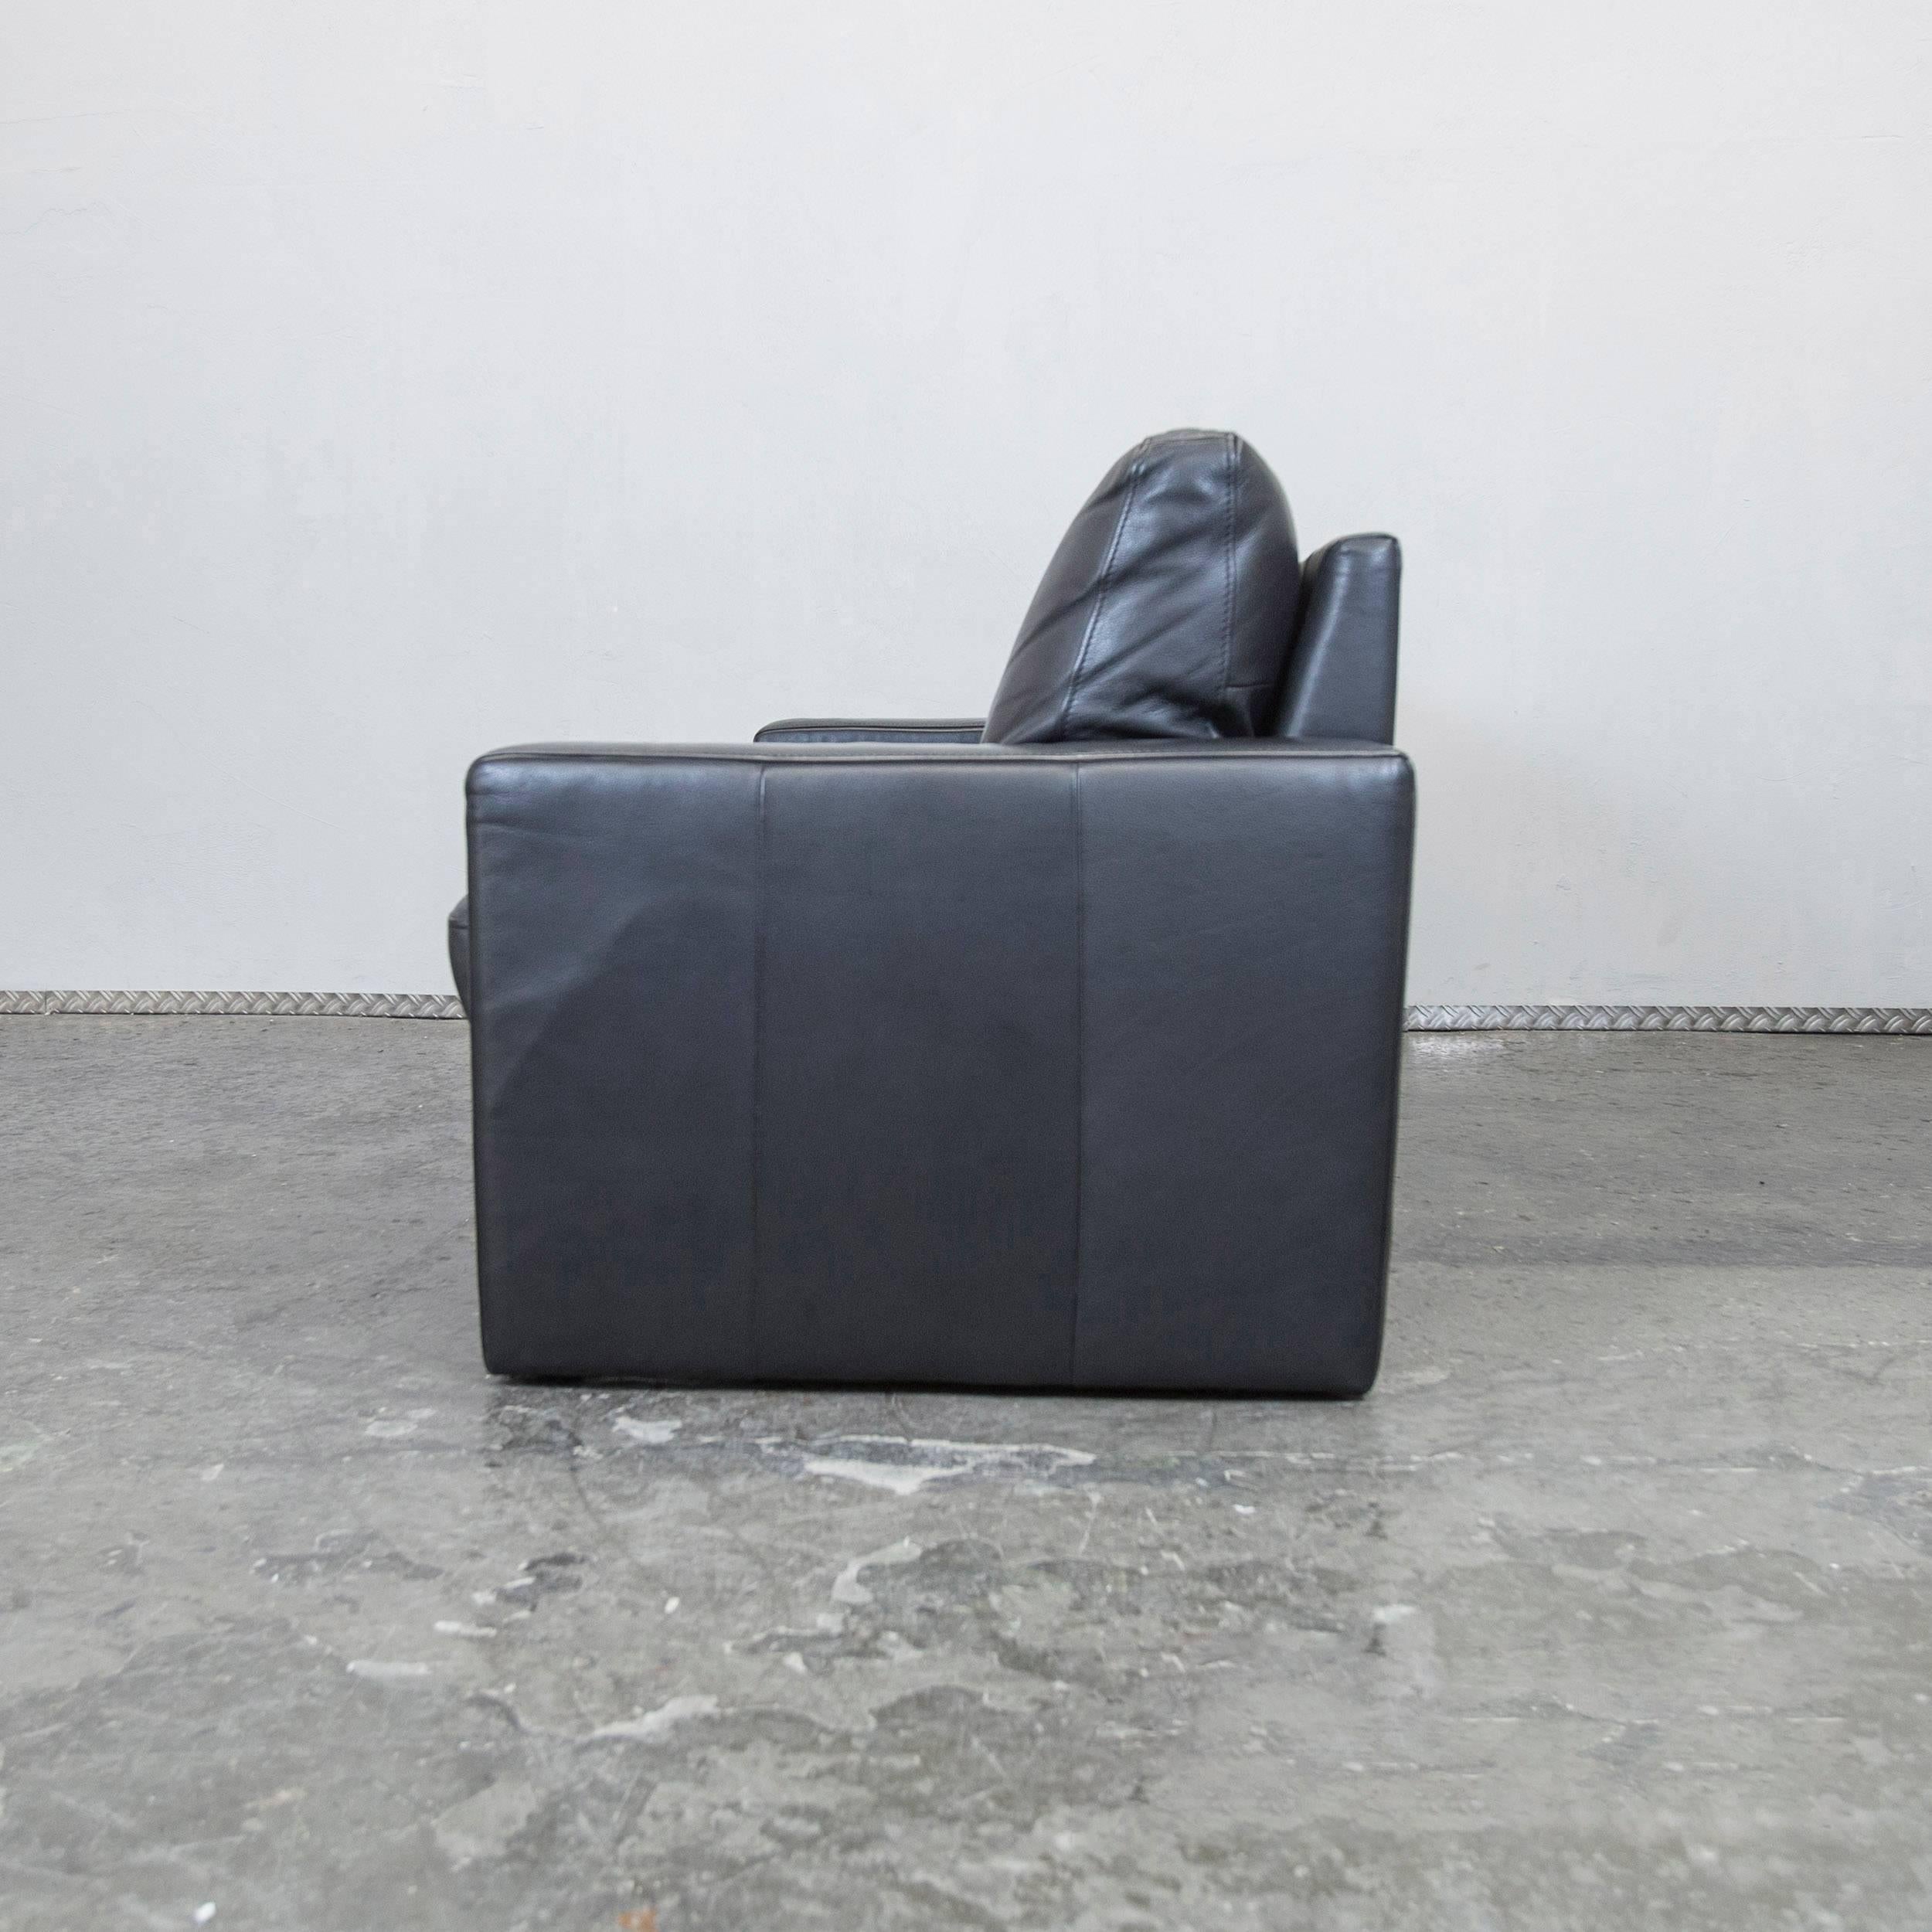 Külkens & Sohn Designer Leather Sofa Black Two-Seat Couch Modern For Sale 2